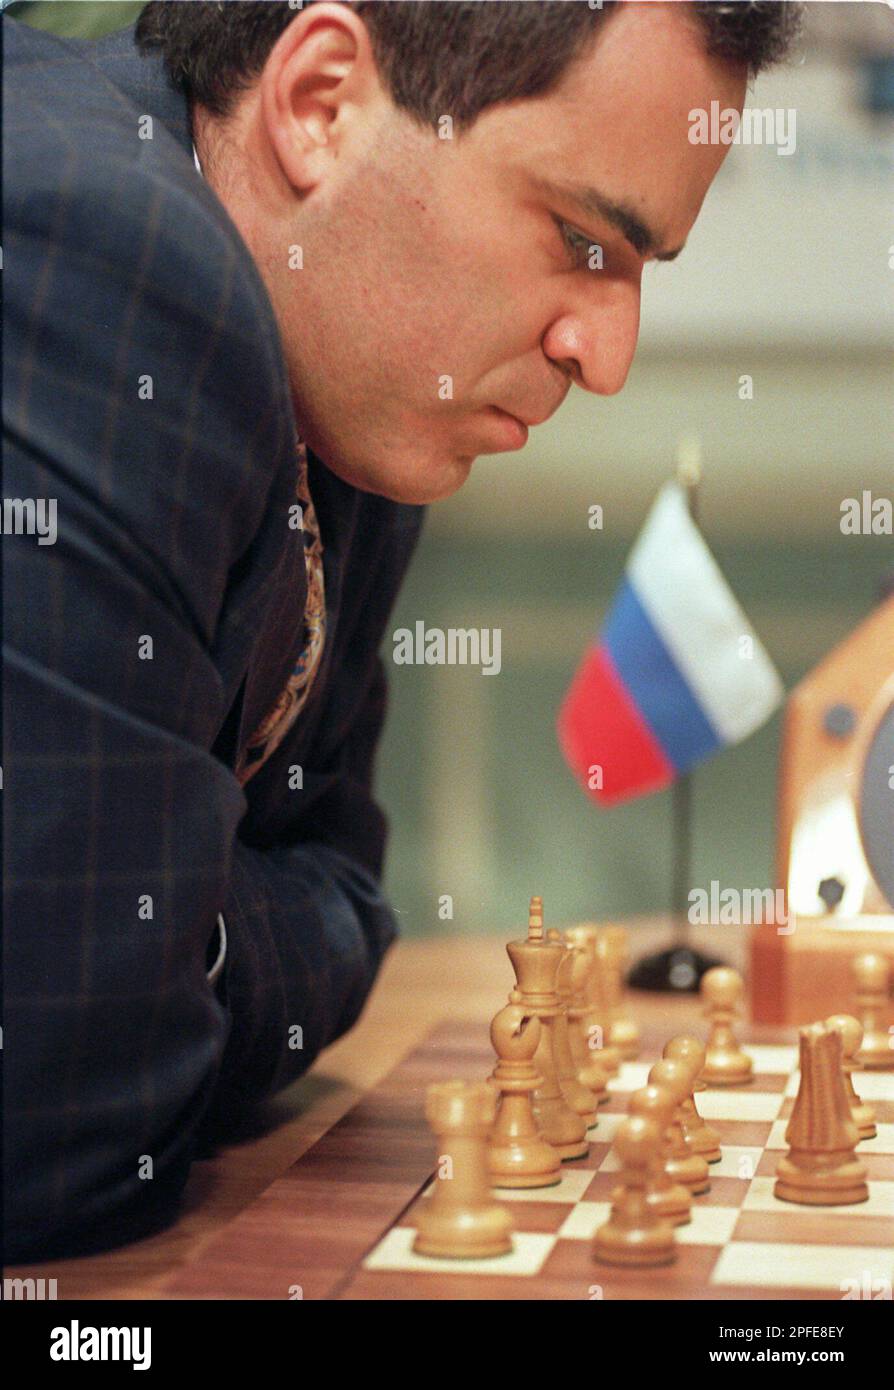 Deep Blue vs Kasparov: Historic Chess Games 